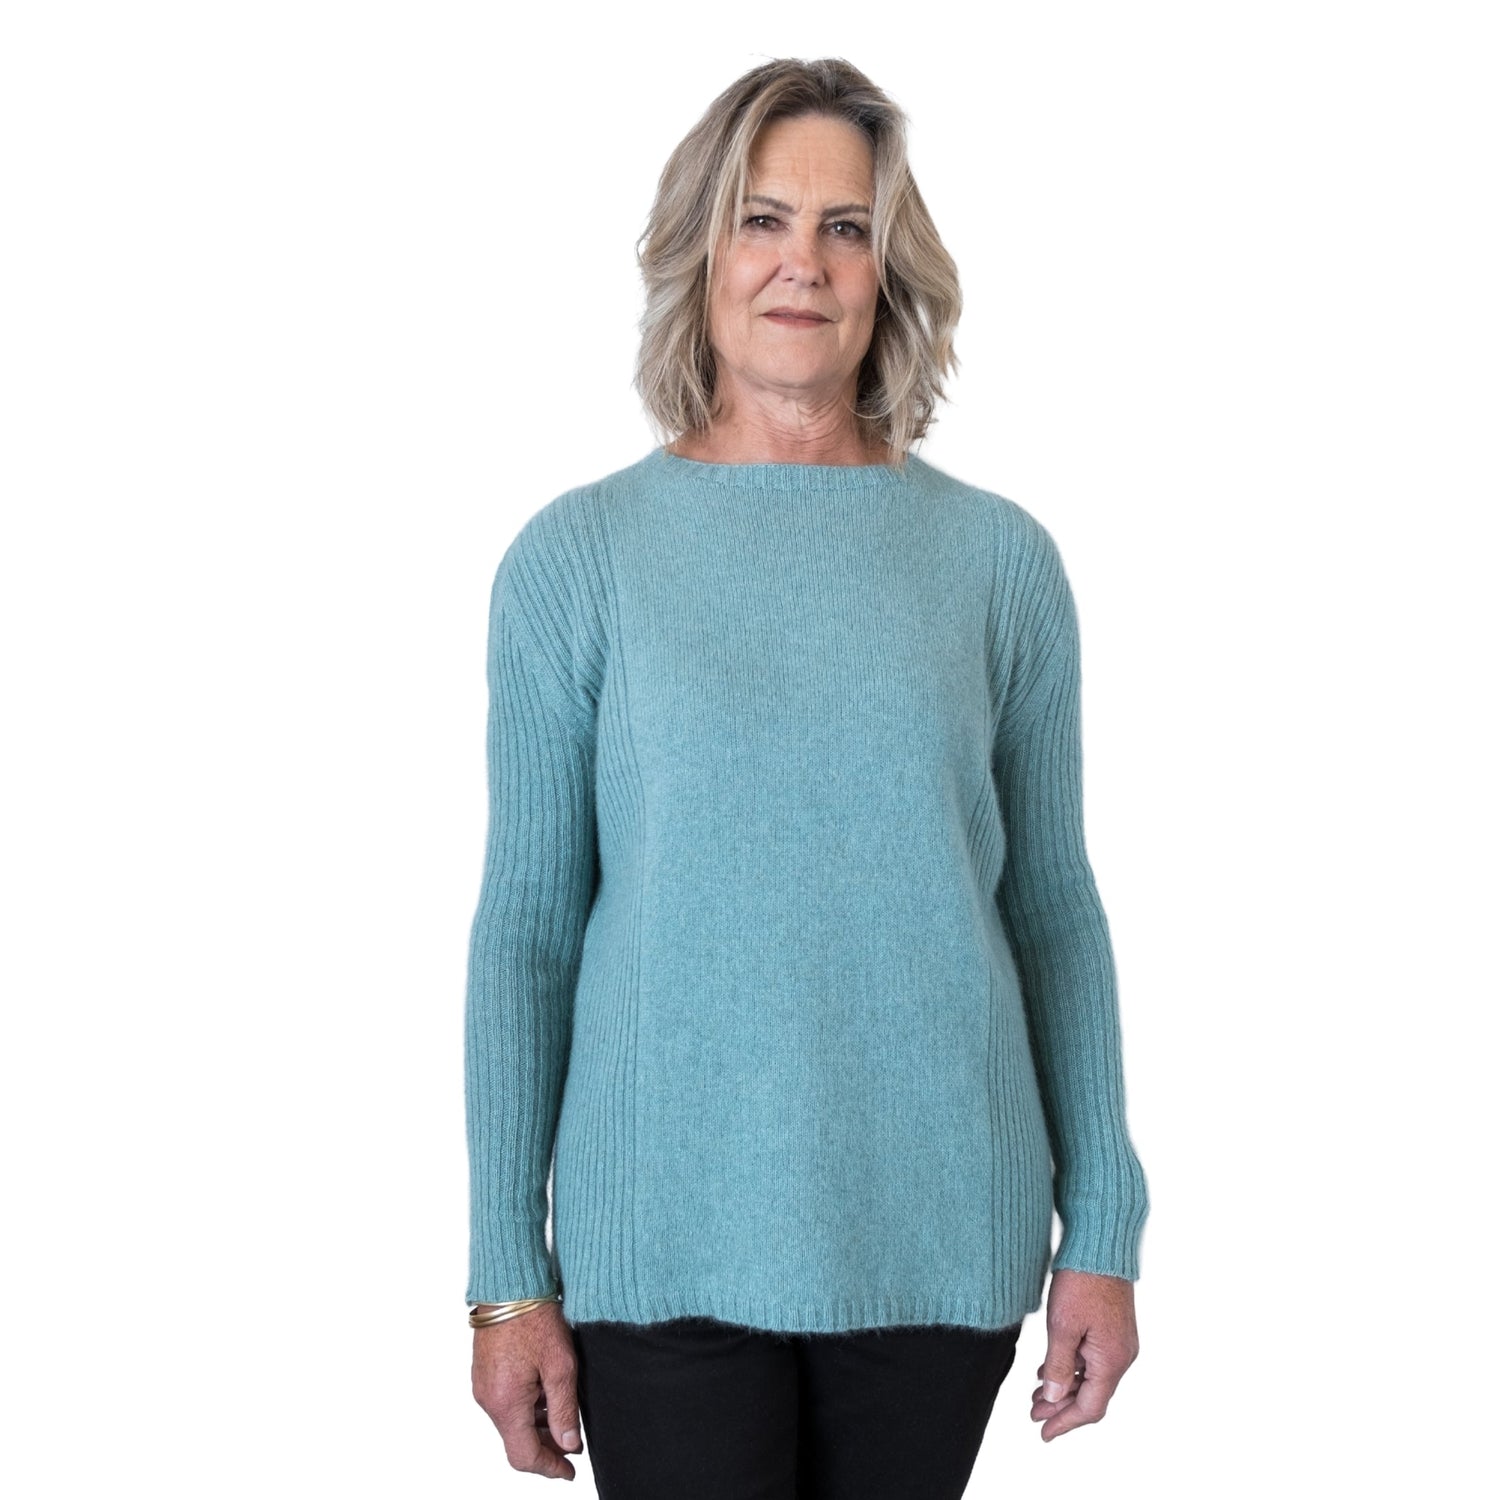 Side Rib sweater in colour Seafoam. Front